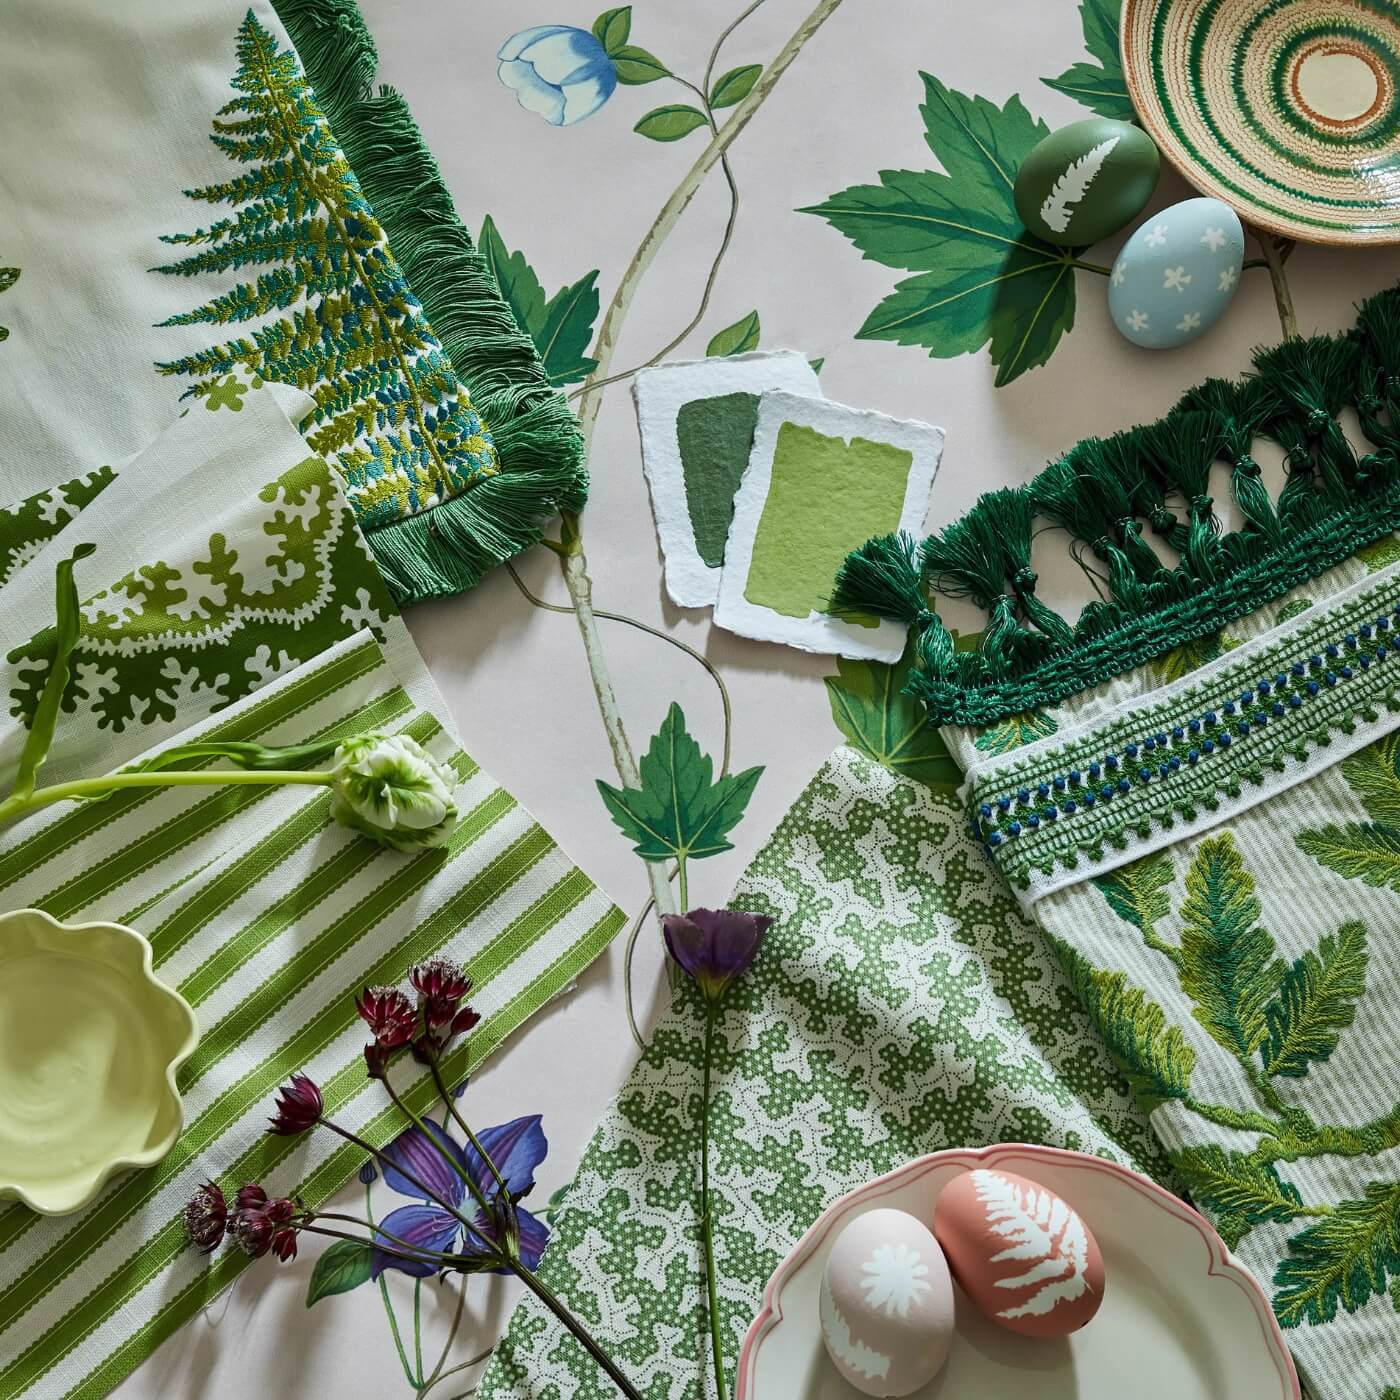 Pinetum Stripe Sap Green Fabric by SAN